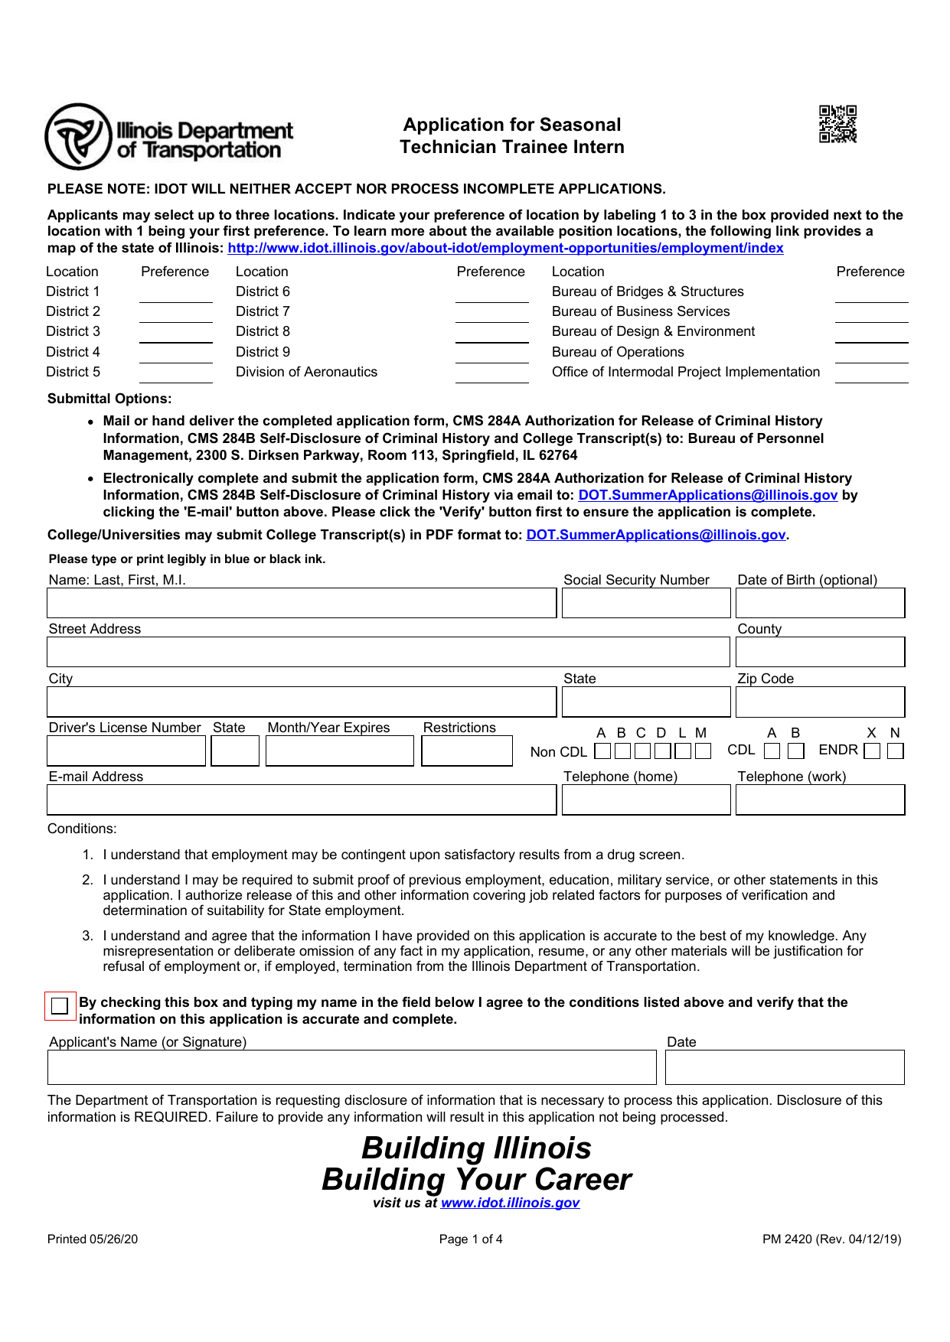 Form PM2420 Application for Seasonal Technician Trainee Intern - Illinois, Page 1